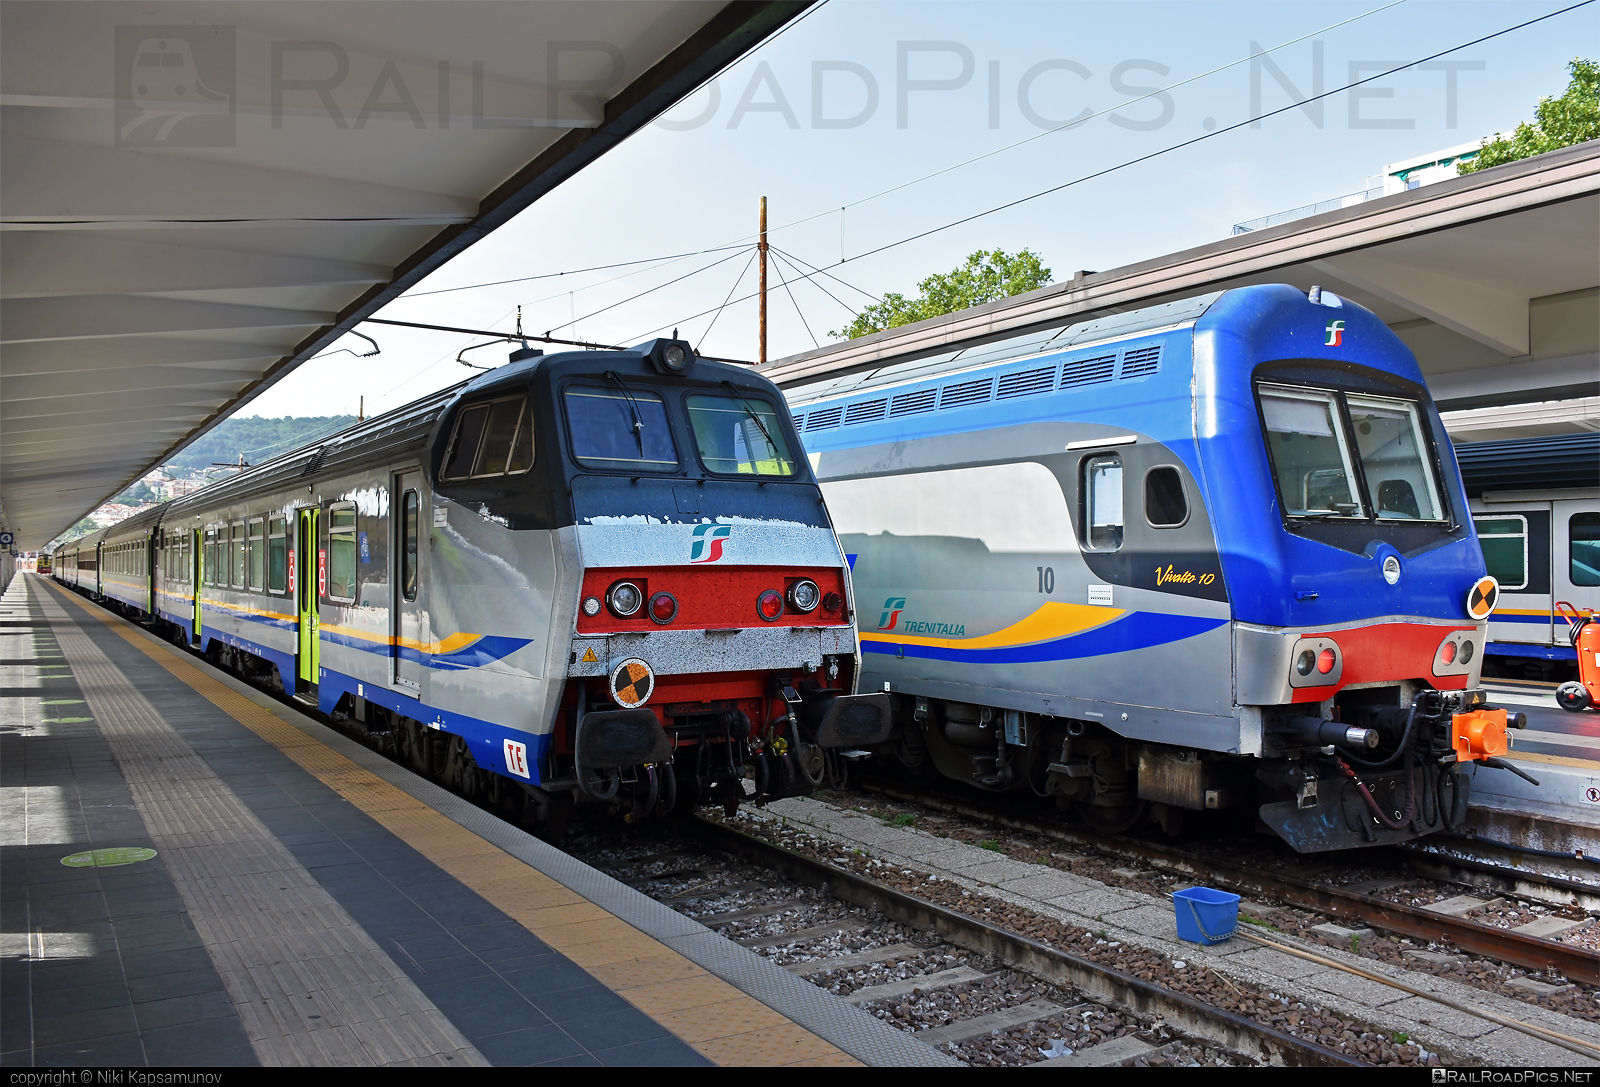 Class B - MDVC semi-pilot - 82-87 081-6 operated by Trenitalia S.p.A. #ferroviedellostato #fs #fsitaliane #mdvc #trenitalia #trenitaliaspa